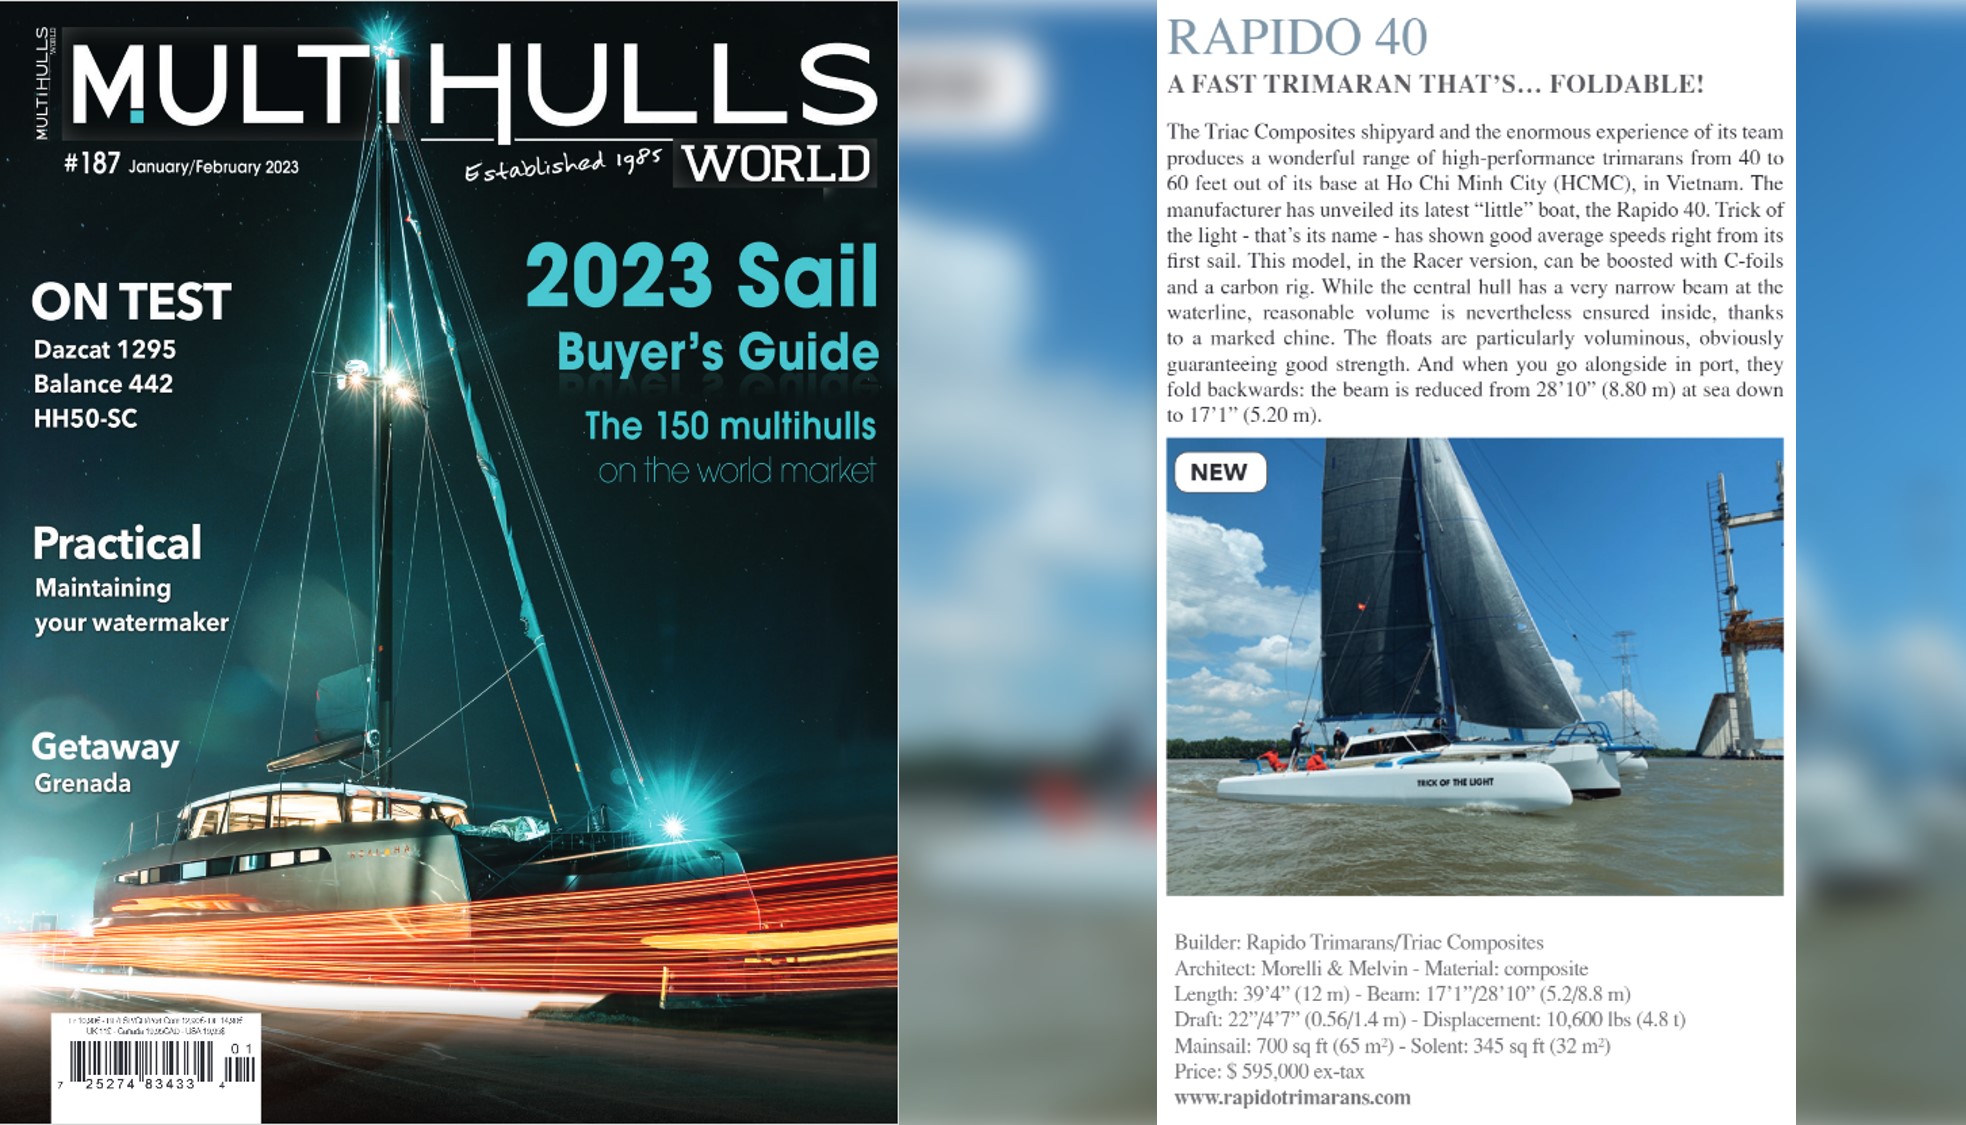 2023 Sail Buyer’s Guide: Rapido 40